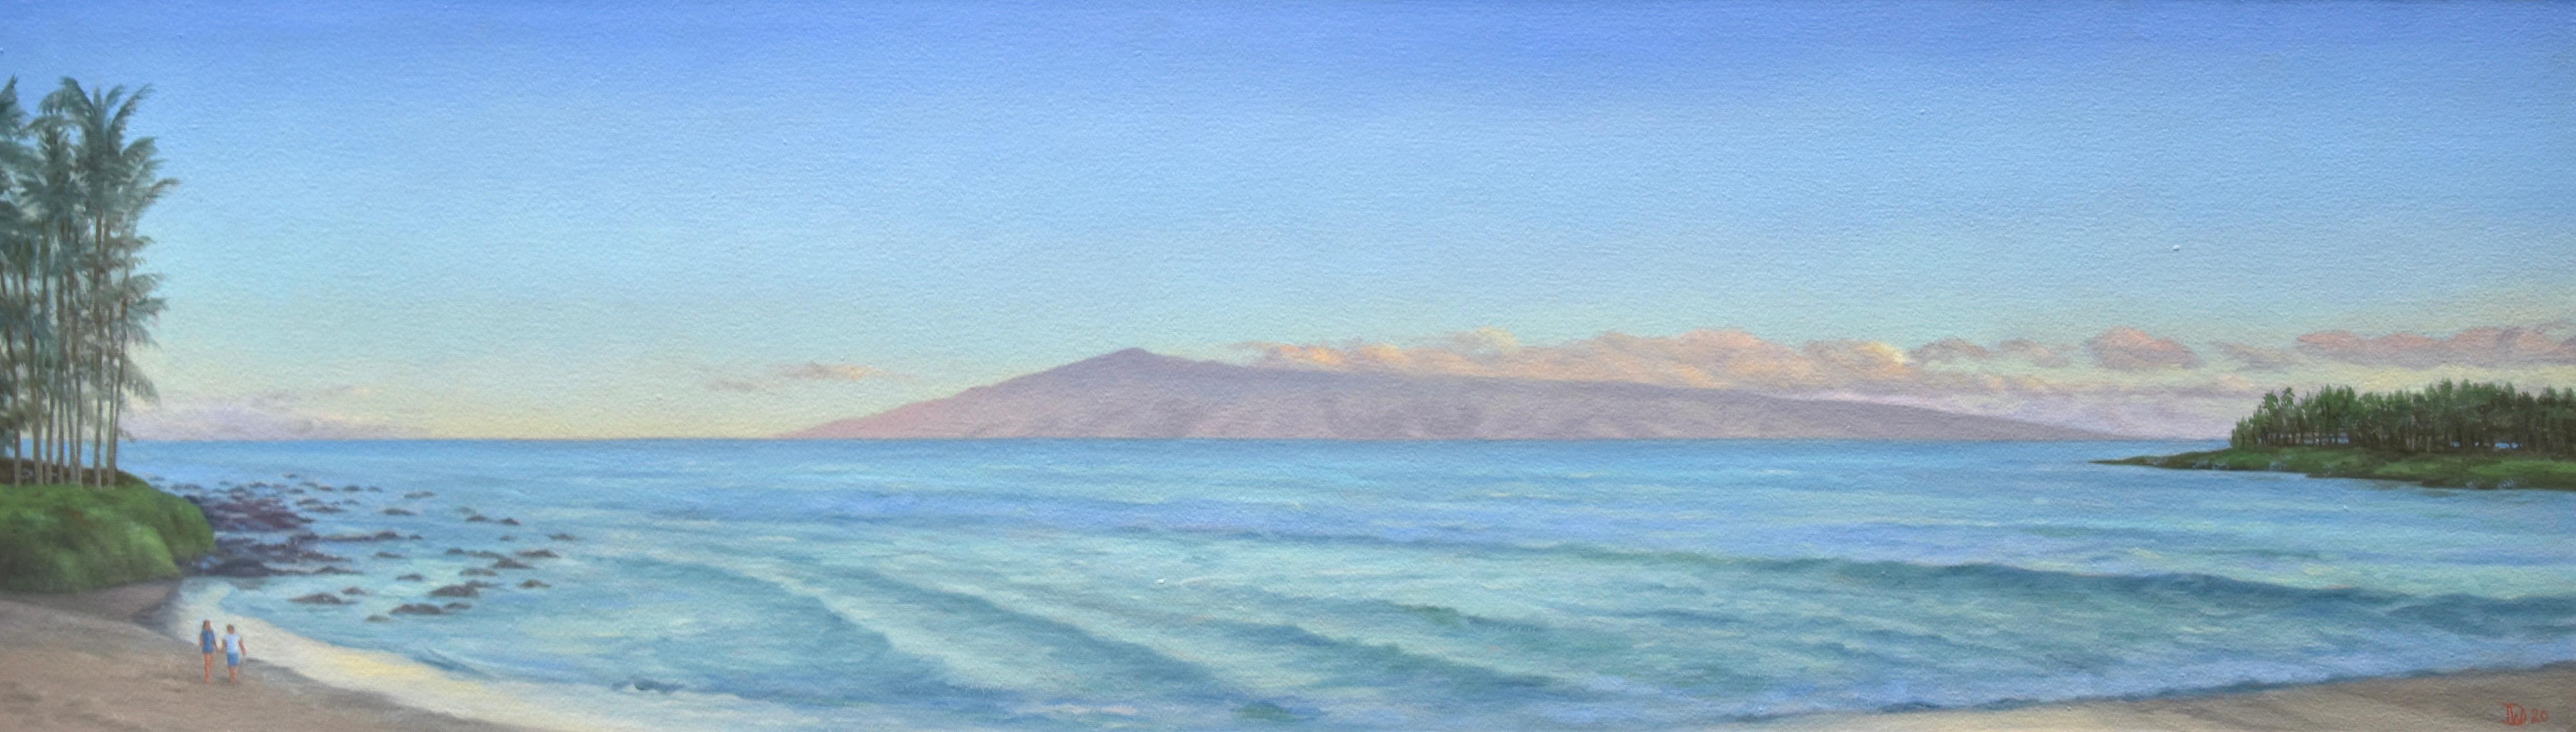 Willard Dixon Landscape Painting - Molokai - Hawaiian Island ocean beach scene at dusk